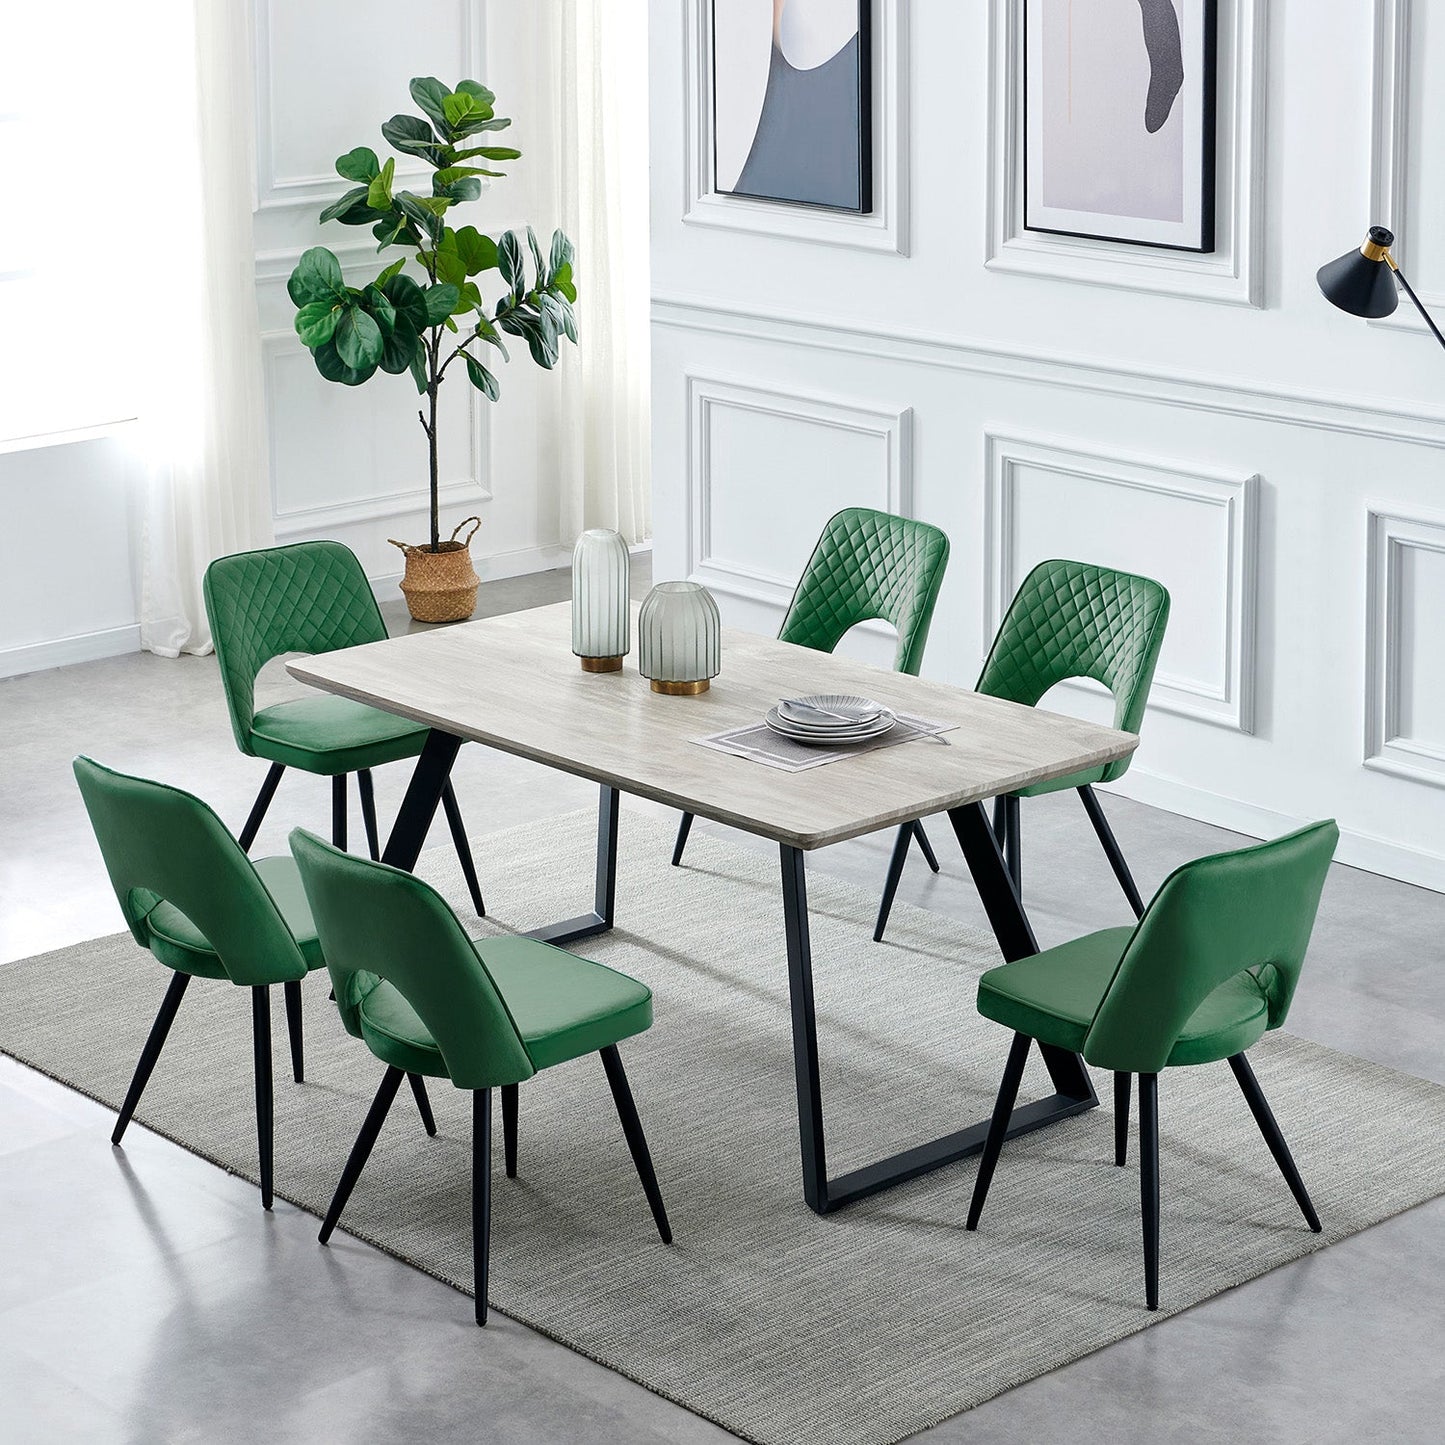 Hope dining chair - set of 2 - dark green Laura James